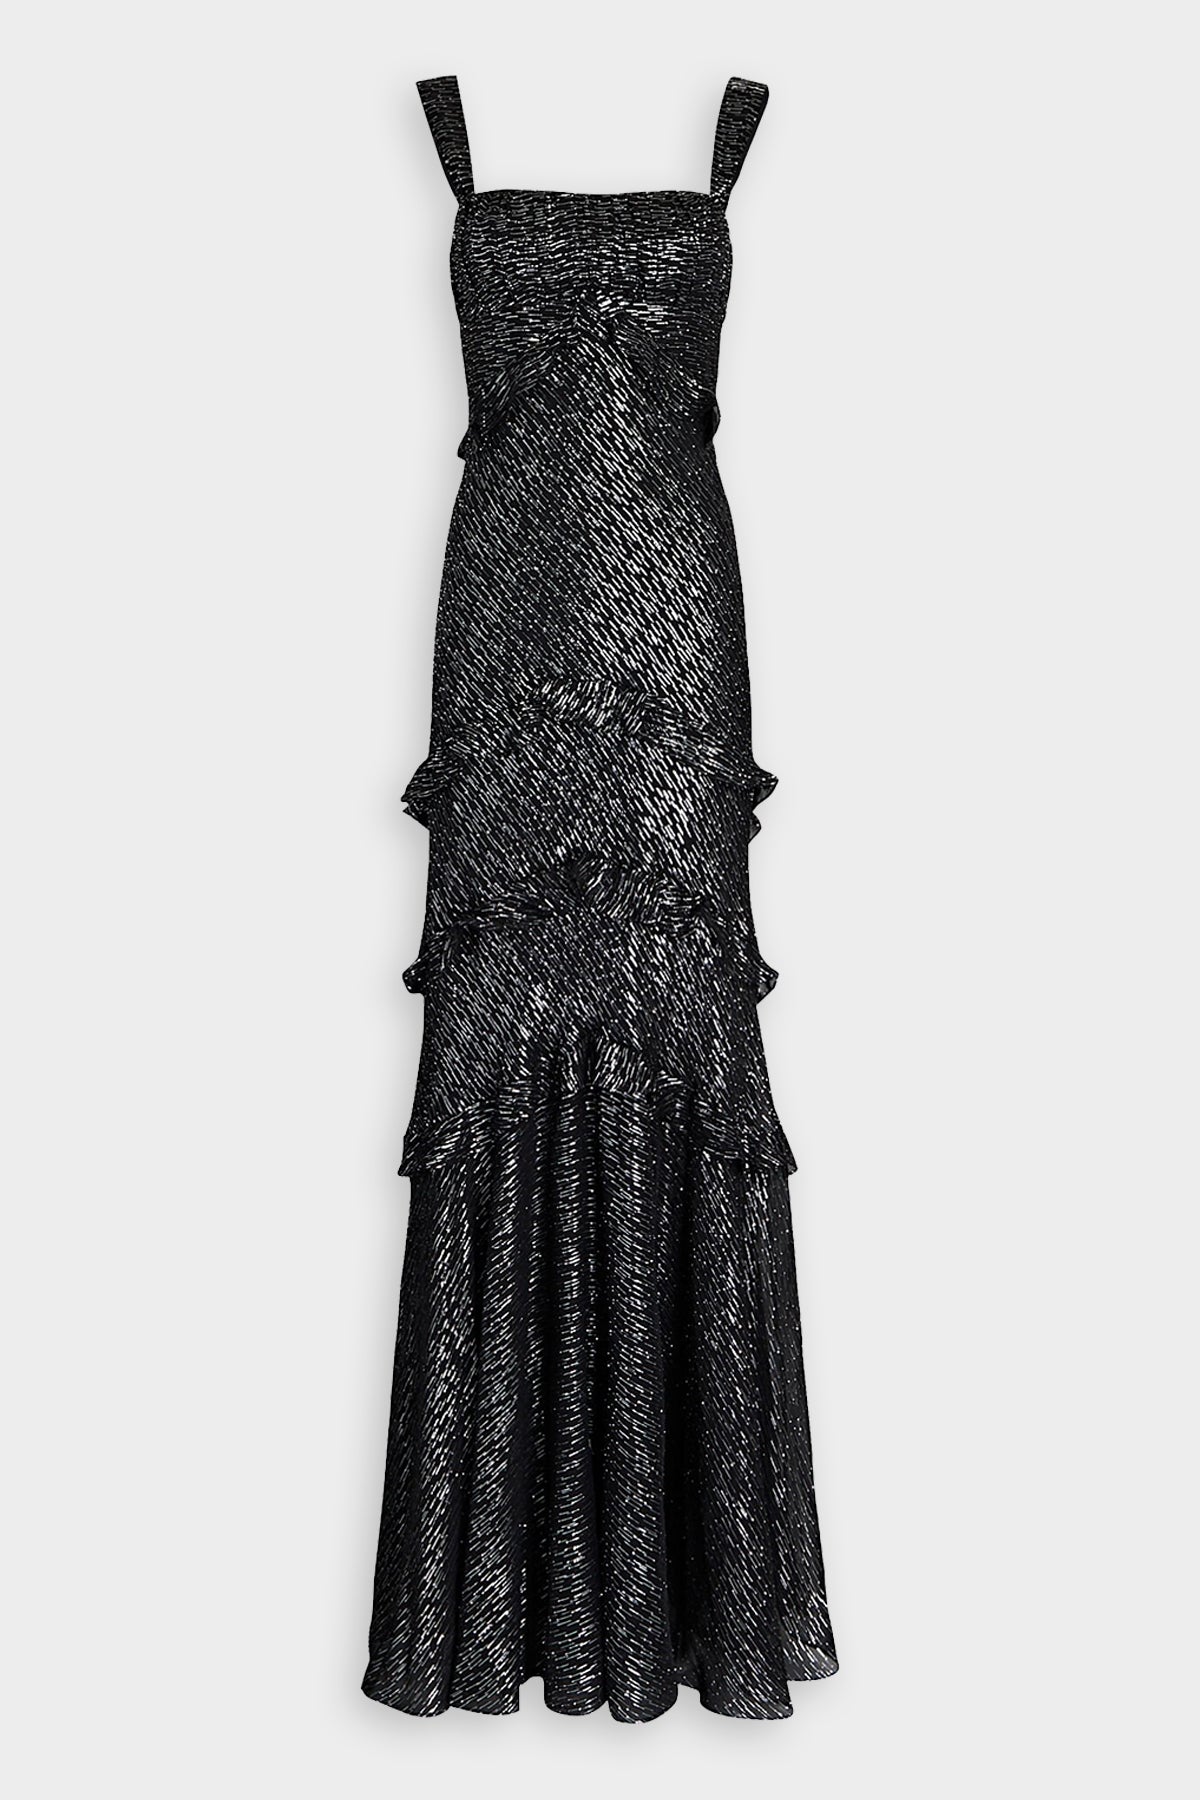 Chandra Dress in Black Silver - shop-olivia.com